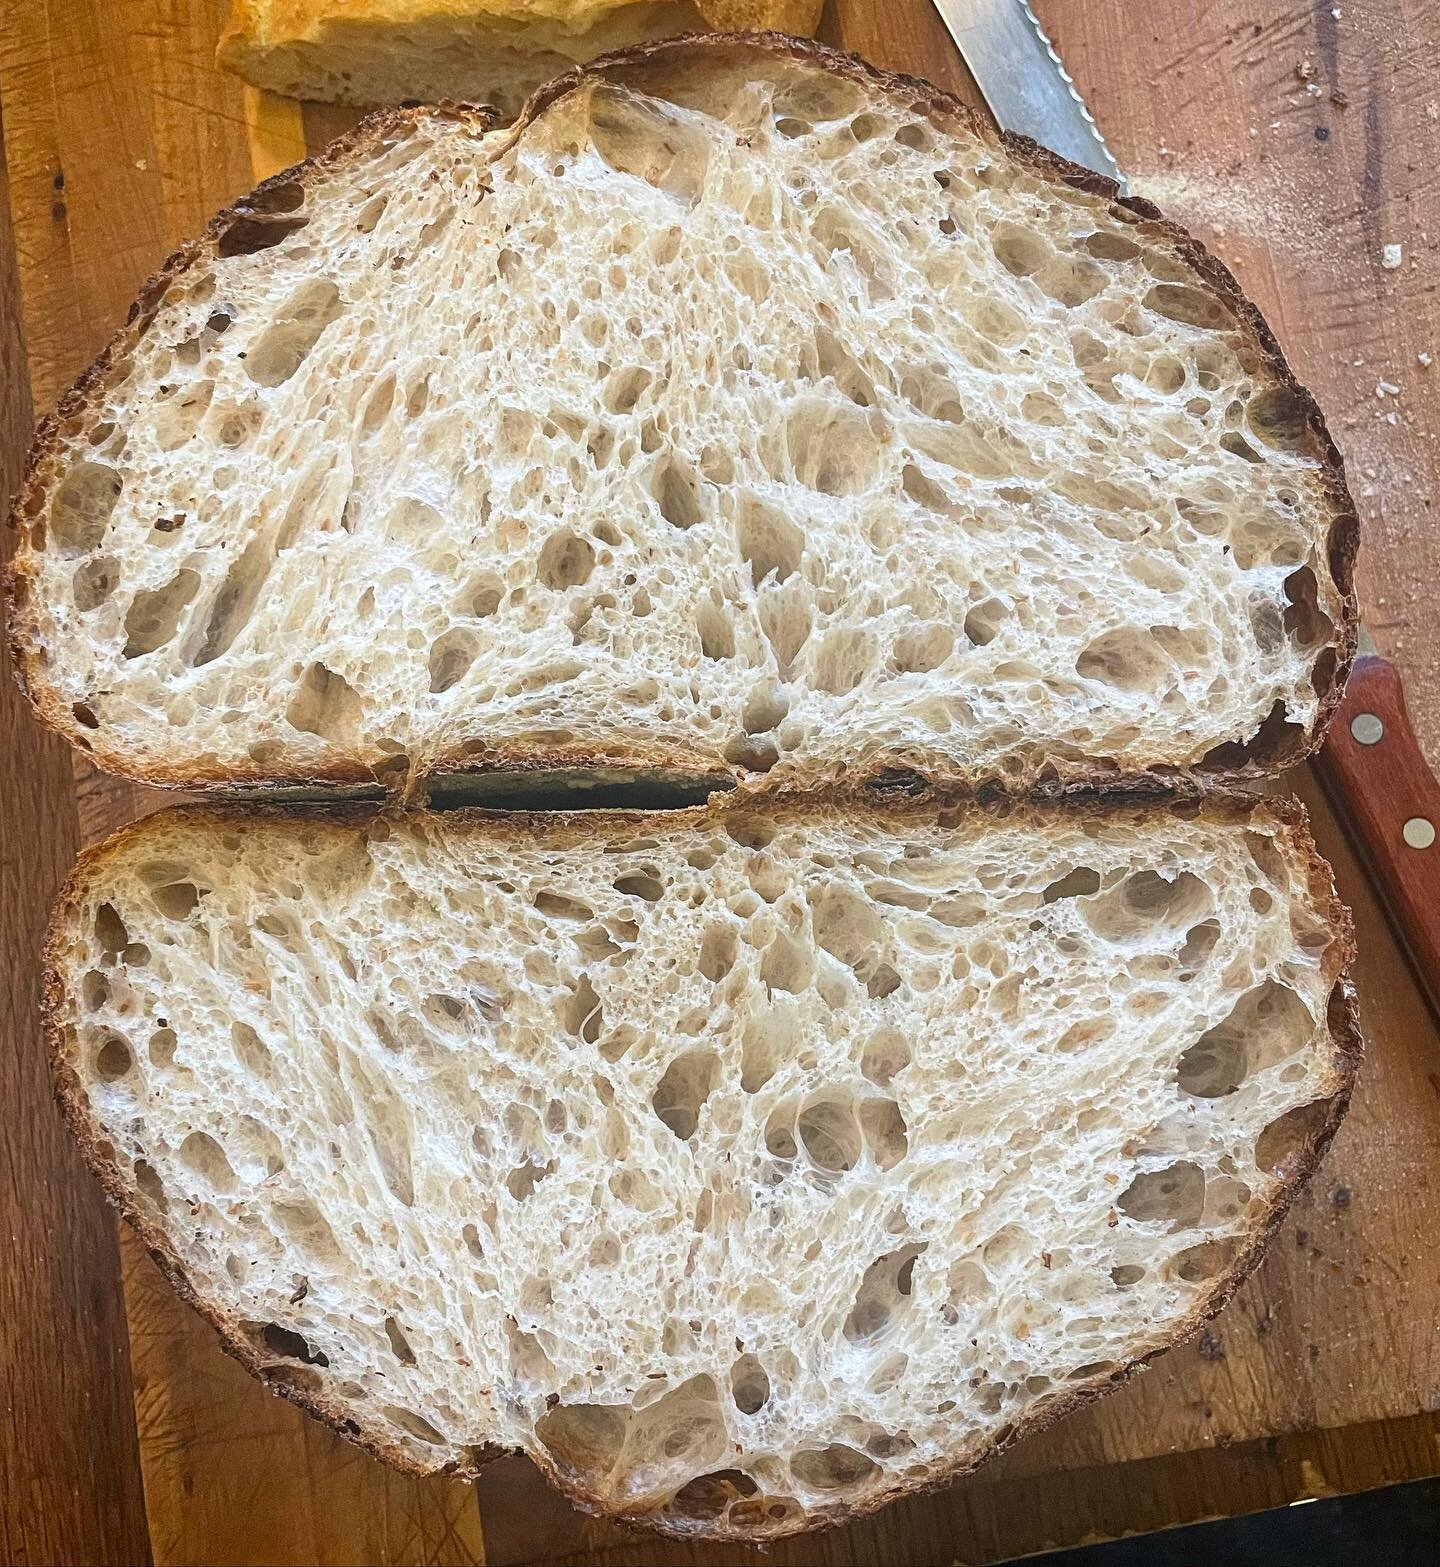 Baked fresh everyday for our cestino del pane ☀️ @molinopaolomariani #solograniitaliani